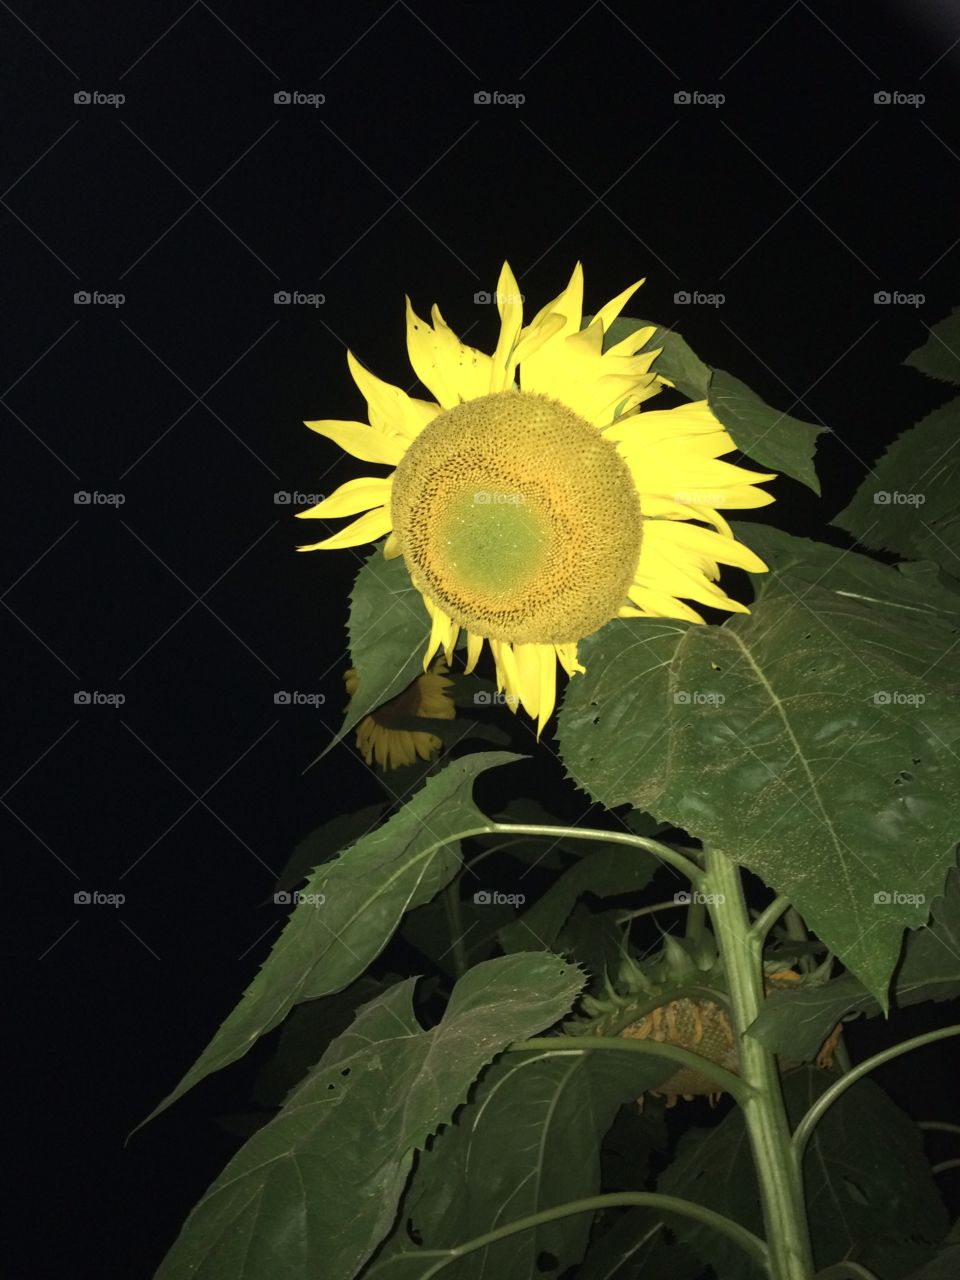 Sunflowers at night